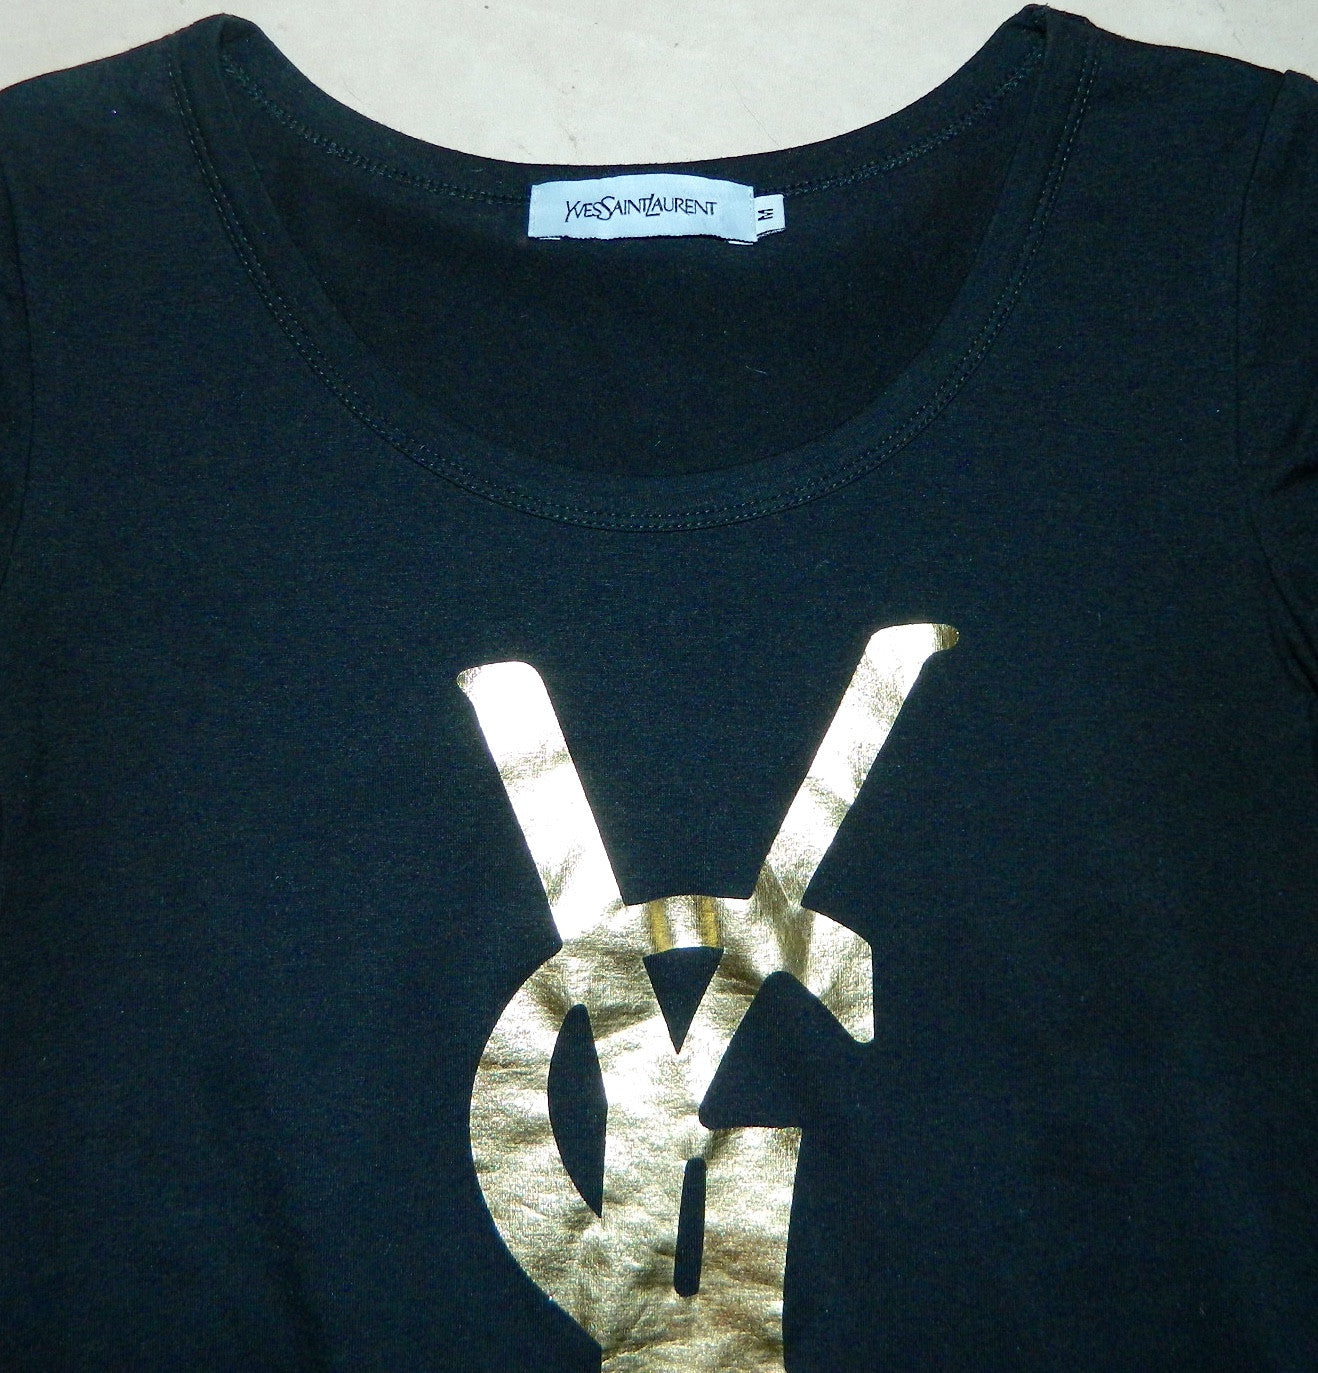 black Yves Saint Laurent tee shirt / YSL gold logo top slim fit S - M